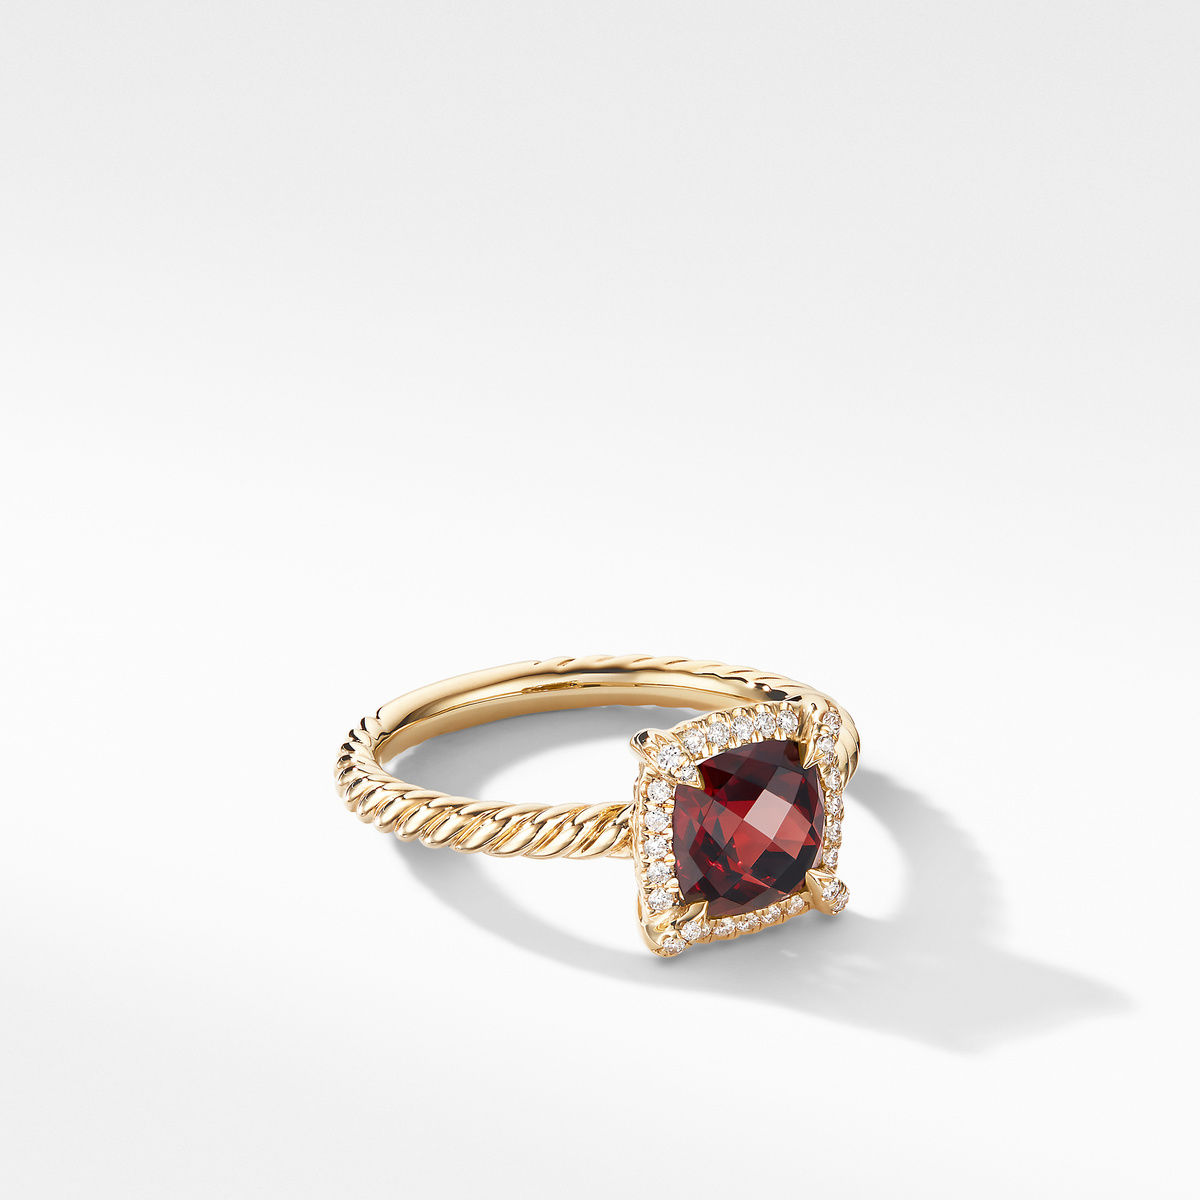 David Yurman Petite Chatelaine Pave Bezel Ring in 18K Yellow Gold with Garnet and Diamonds - Size 5.5